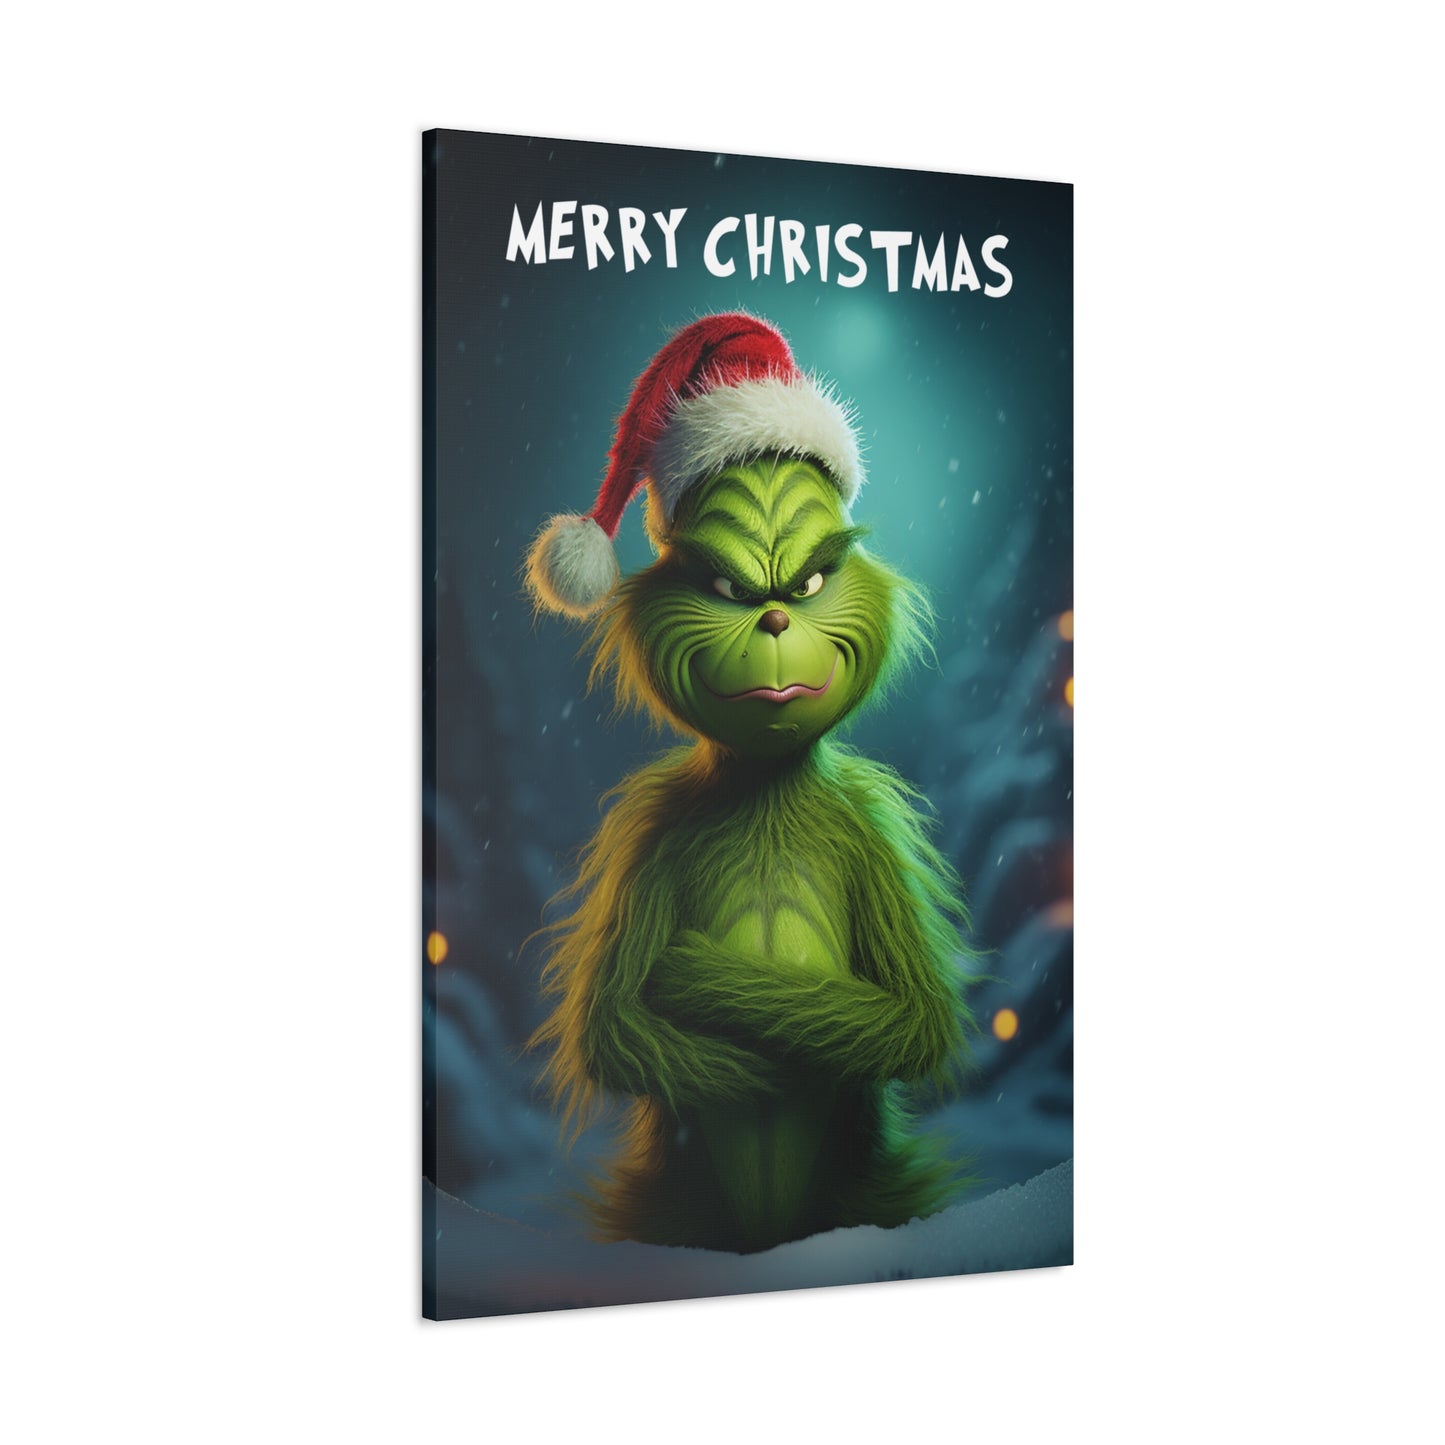 The Grinch Christmas art prints